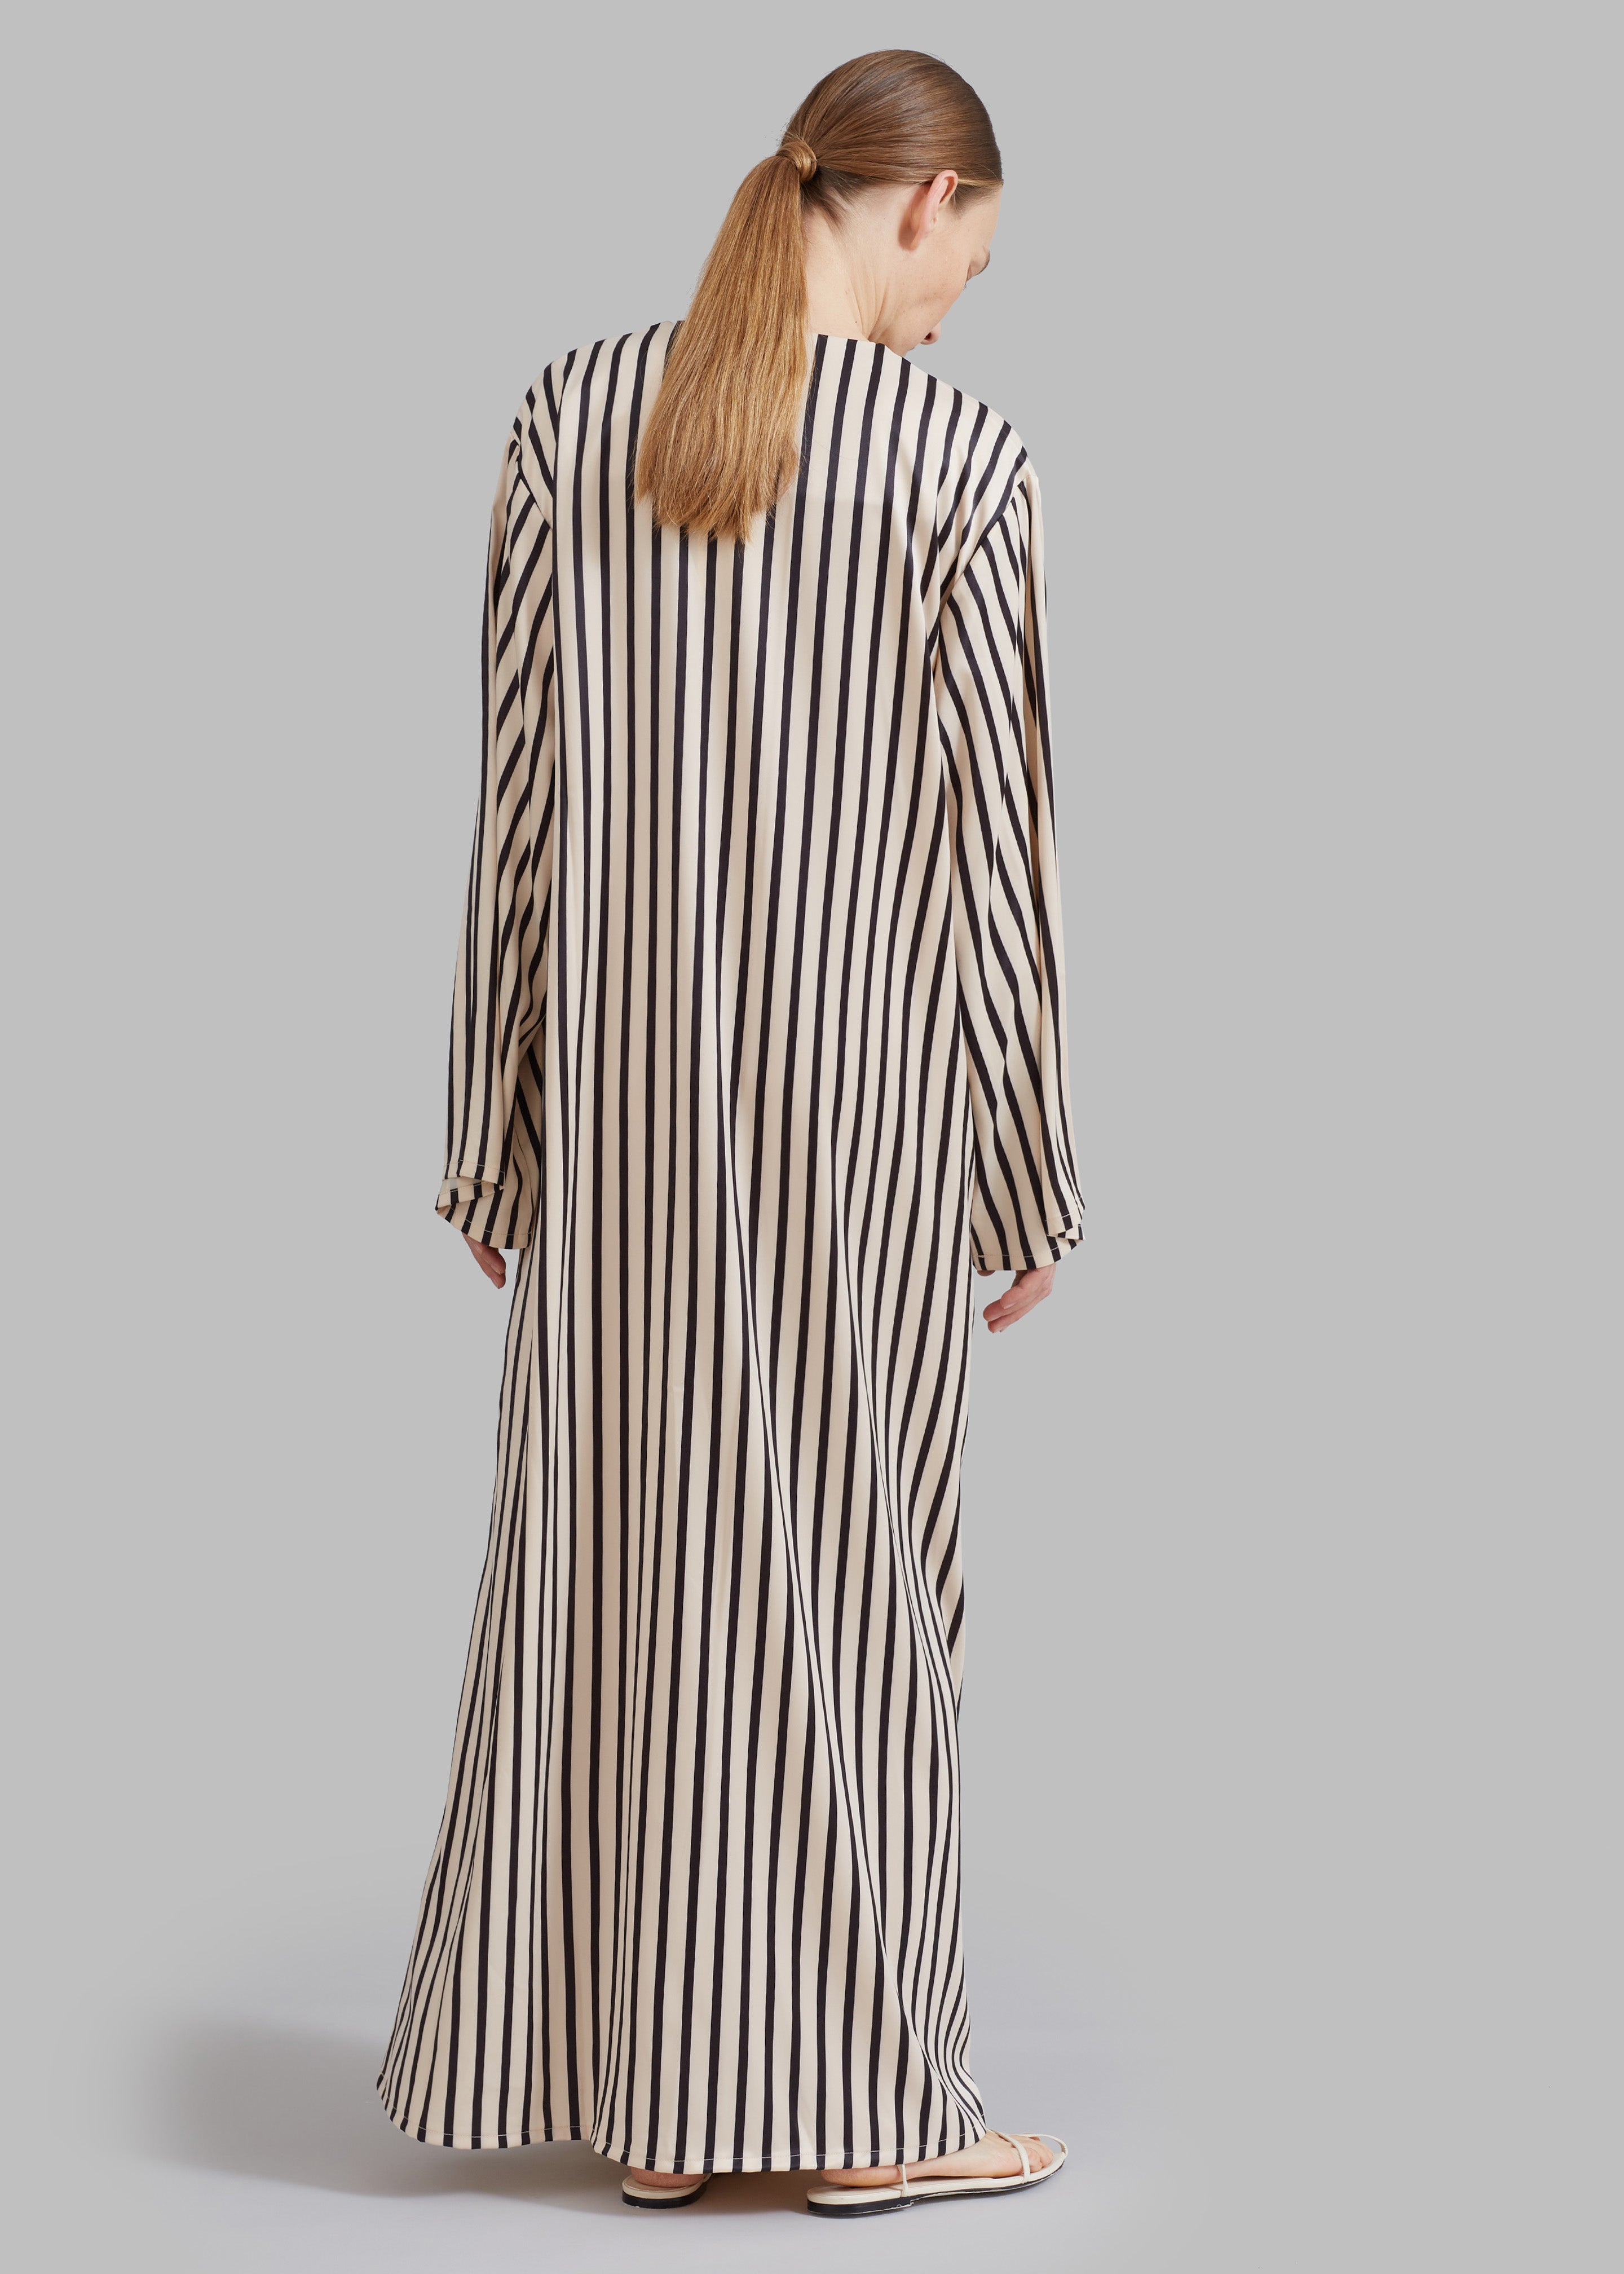 Solaqua The Resort Dress - Ecru with Black Stripes - 5